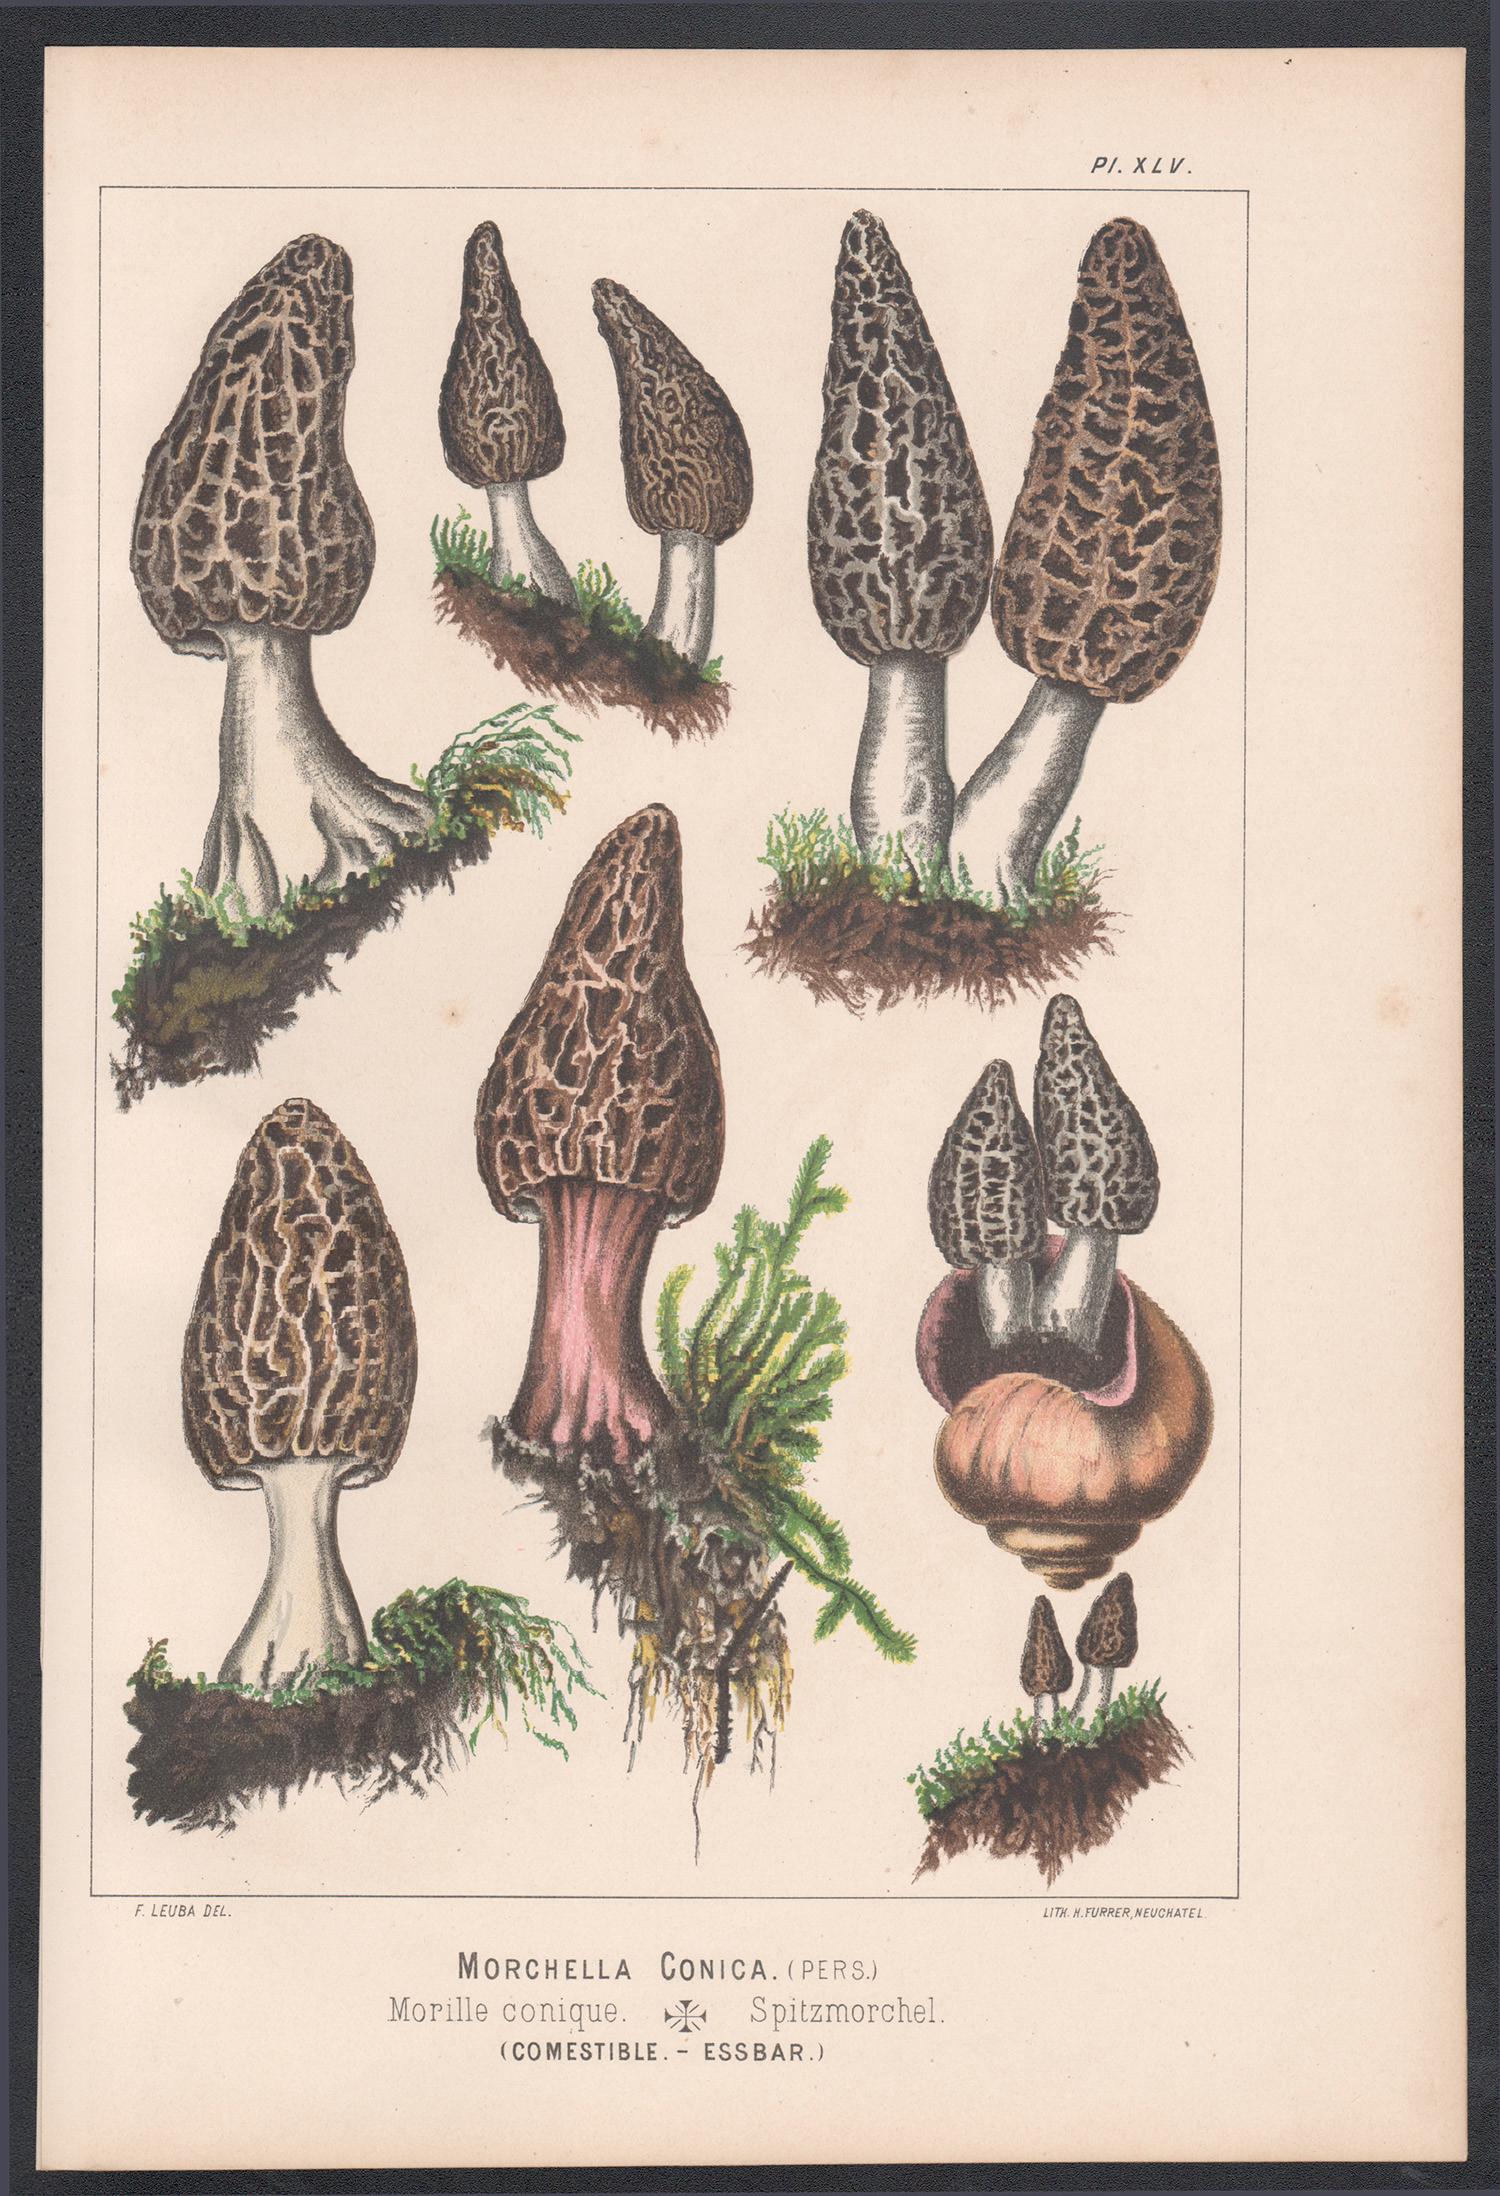 Morchella Conica, Leuba ancien tirage chromolithographe champignon - Print de H Furrer after Fritz Leuba